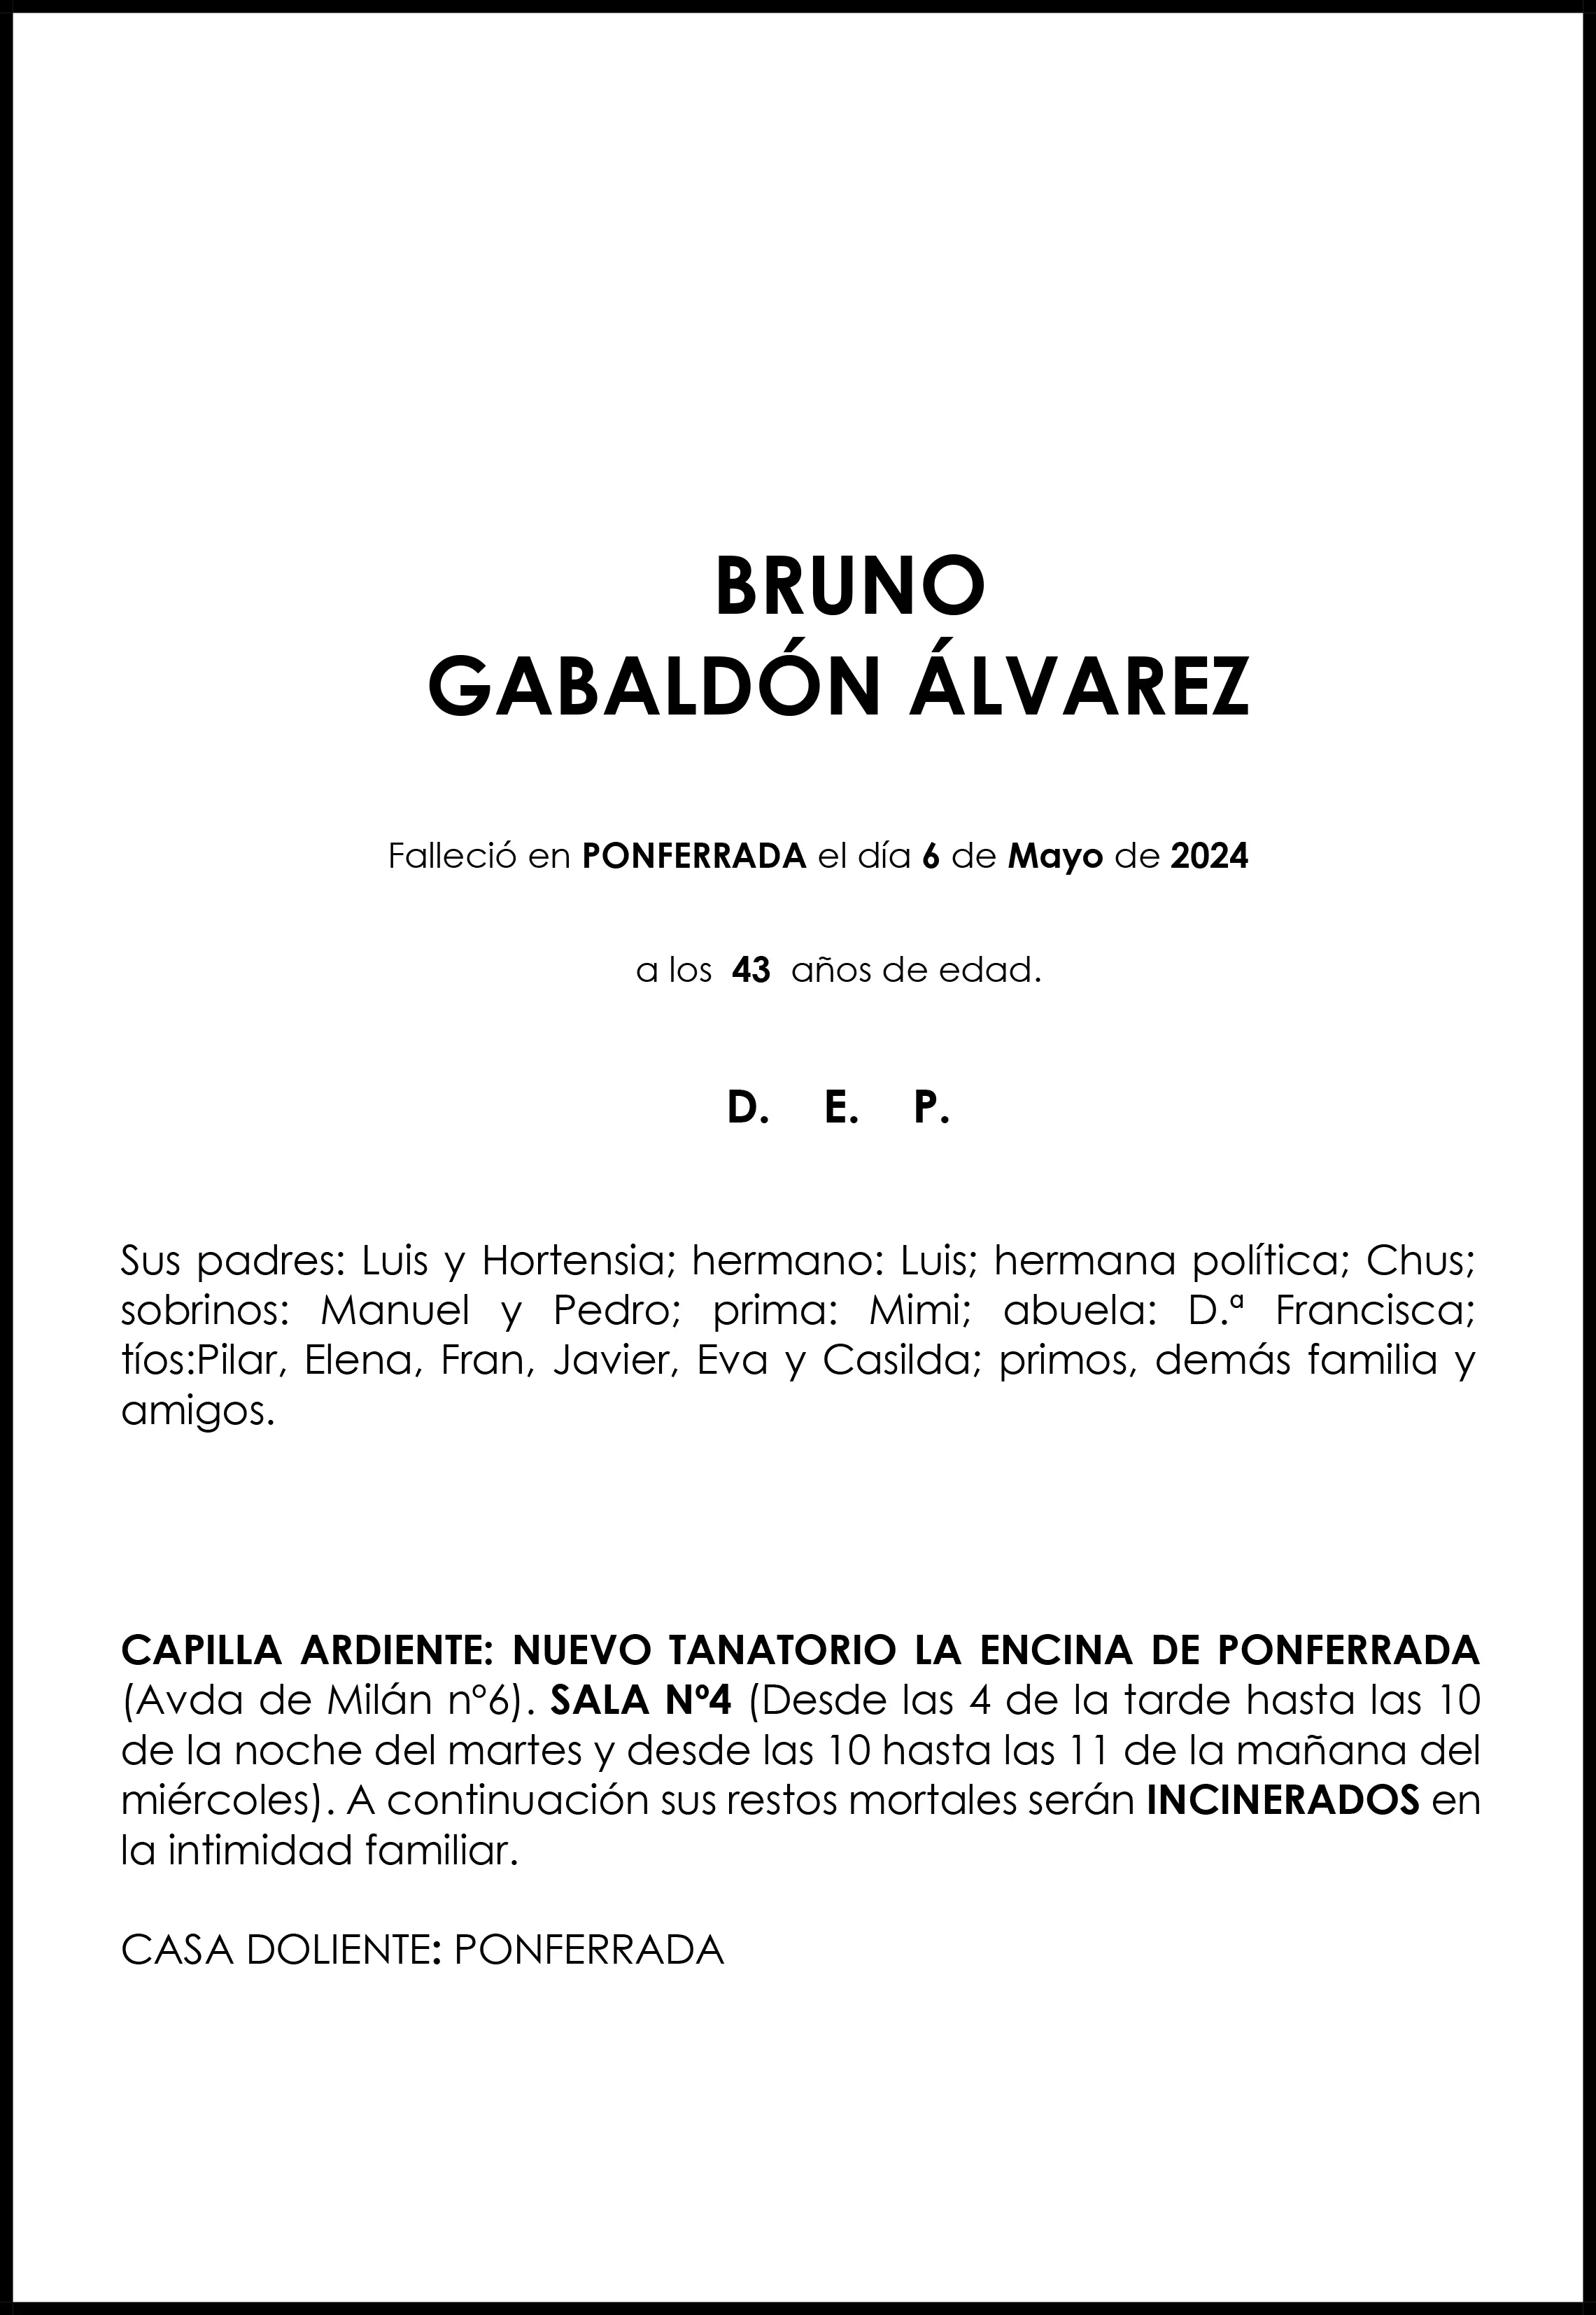 BRUNO GABALDON ALVAREZ